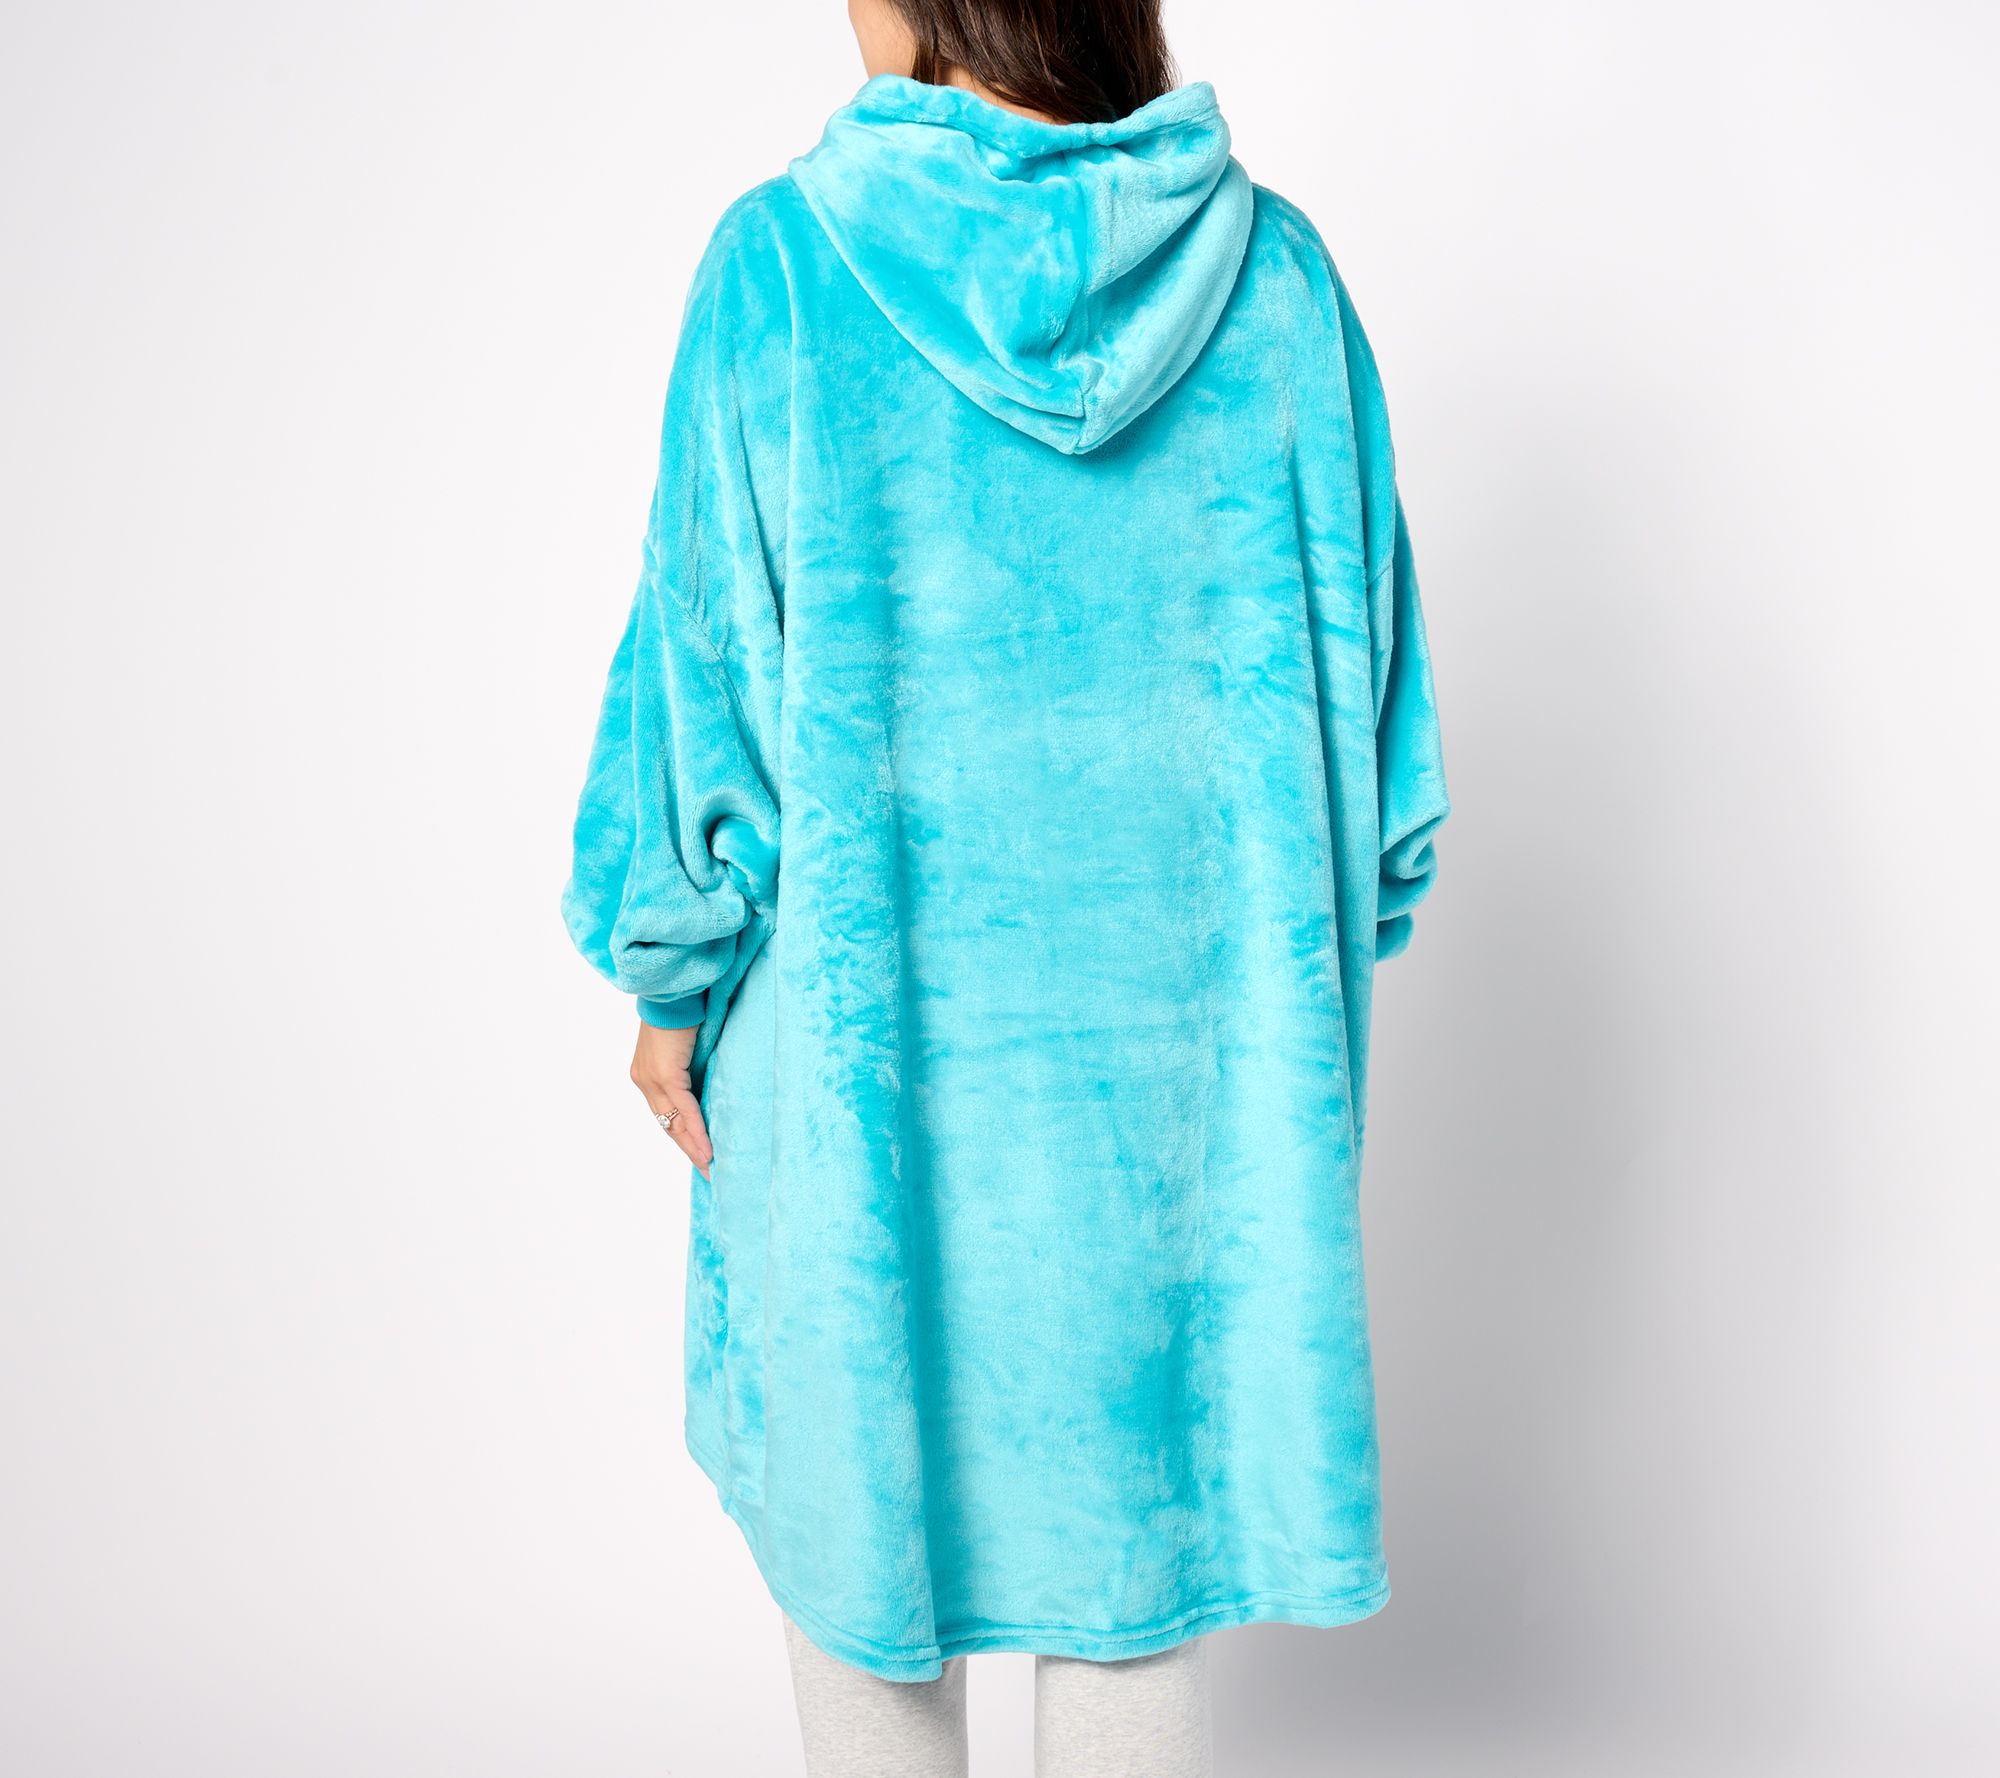 The Comfy Dream Quarter Zip Wearable Blanket